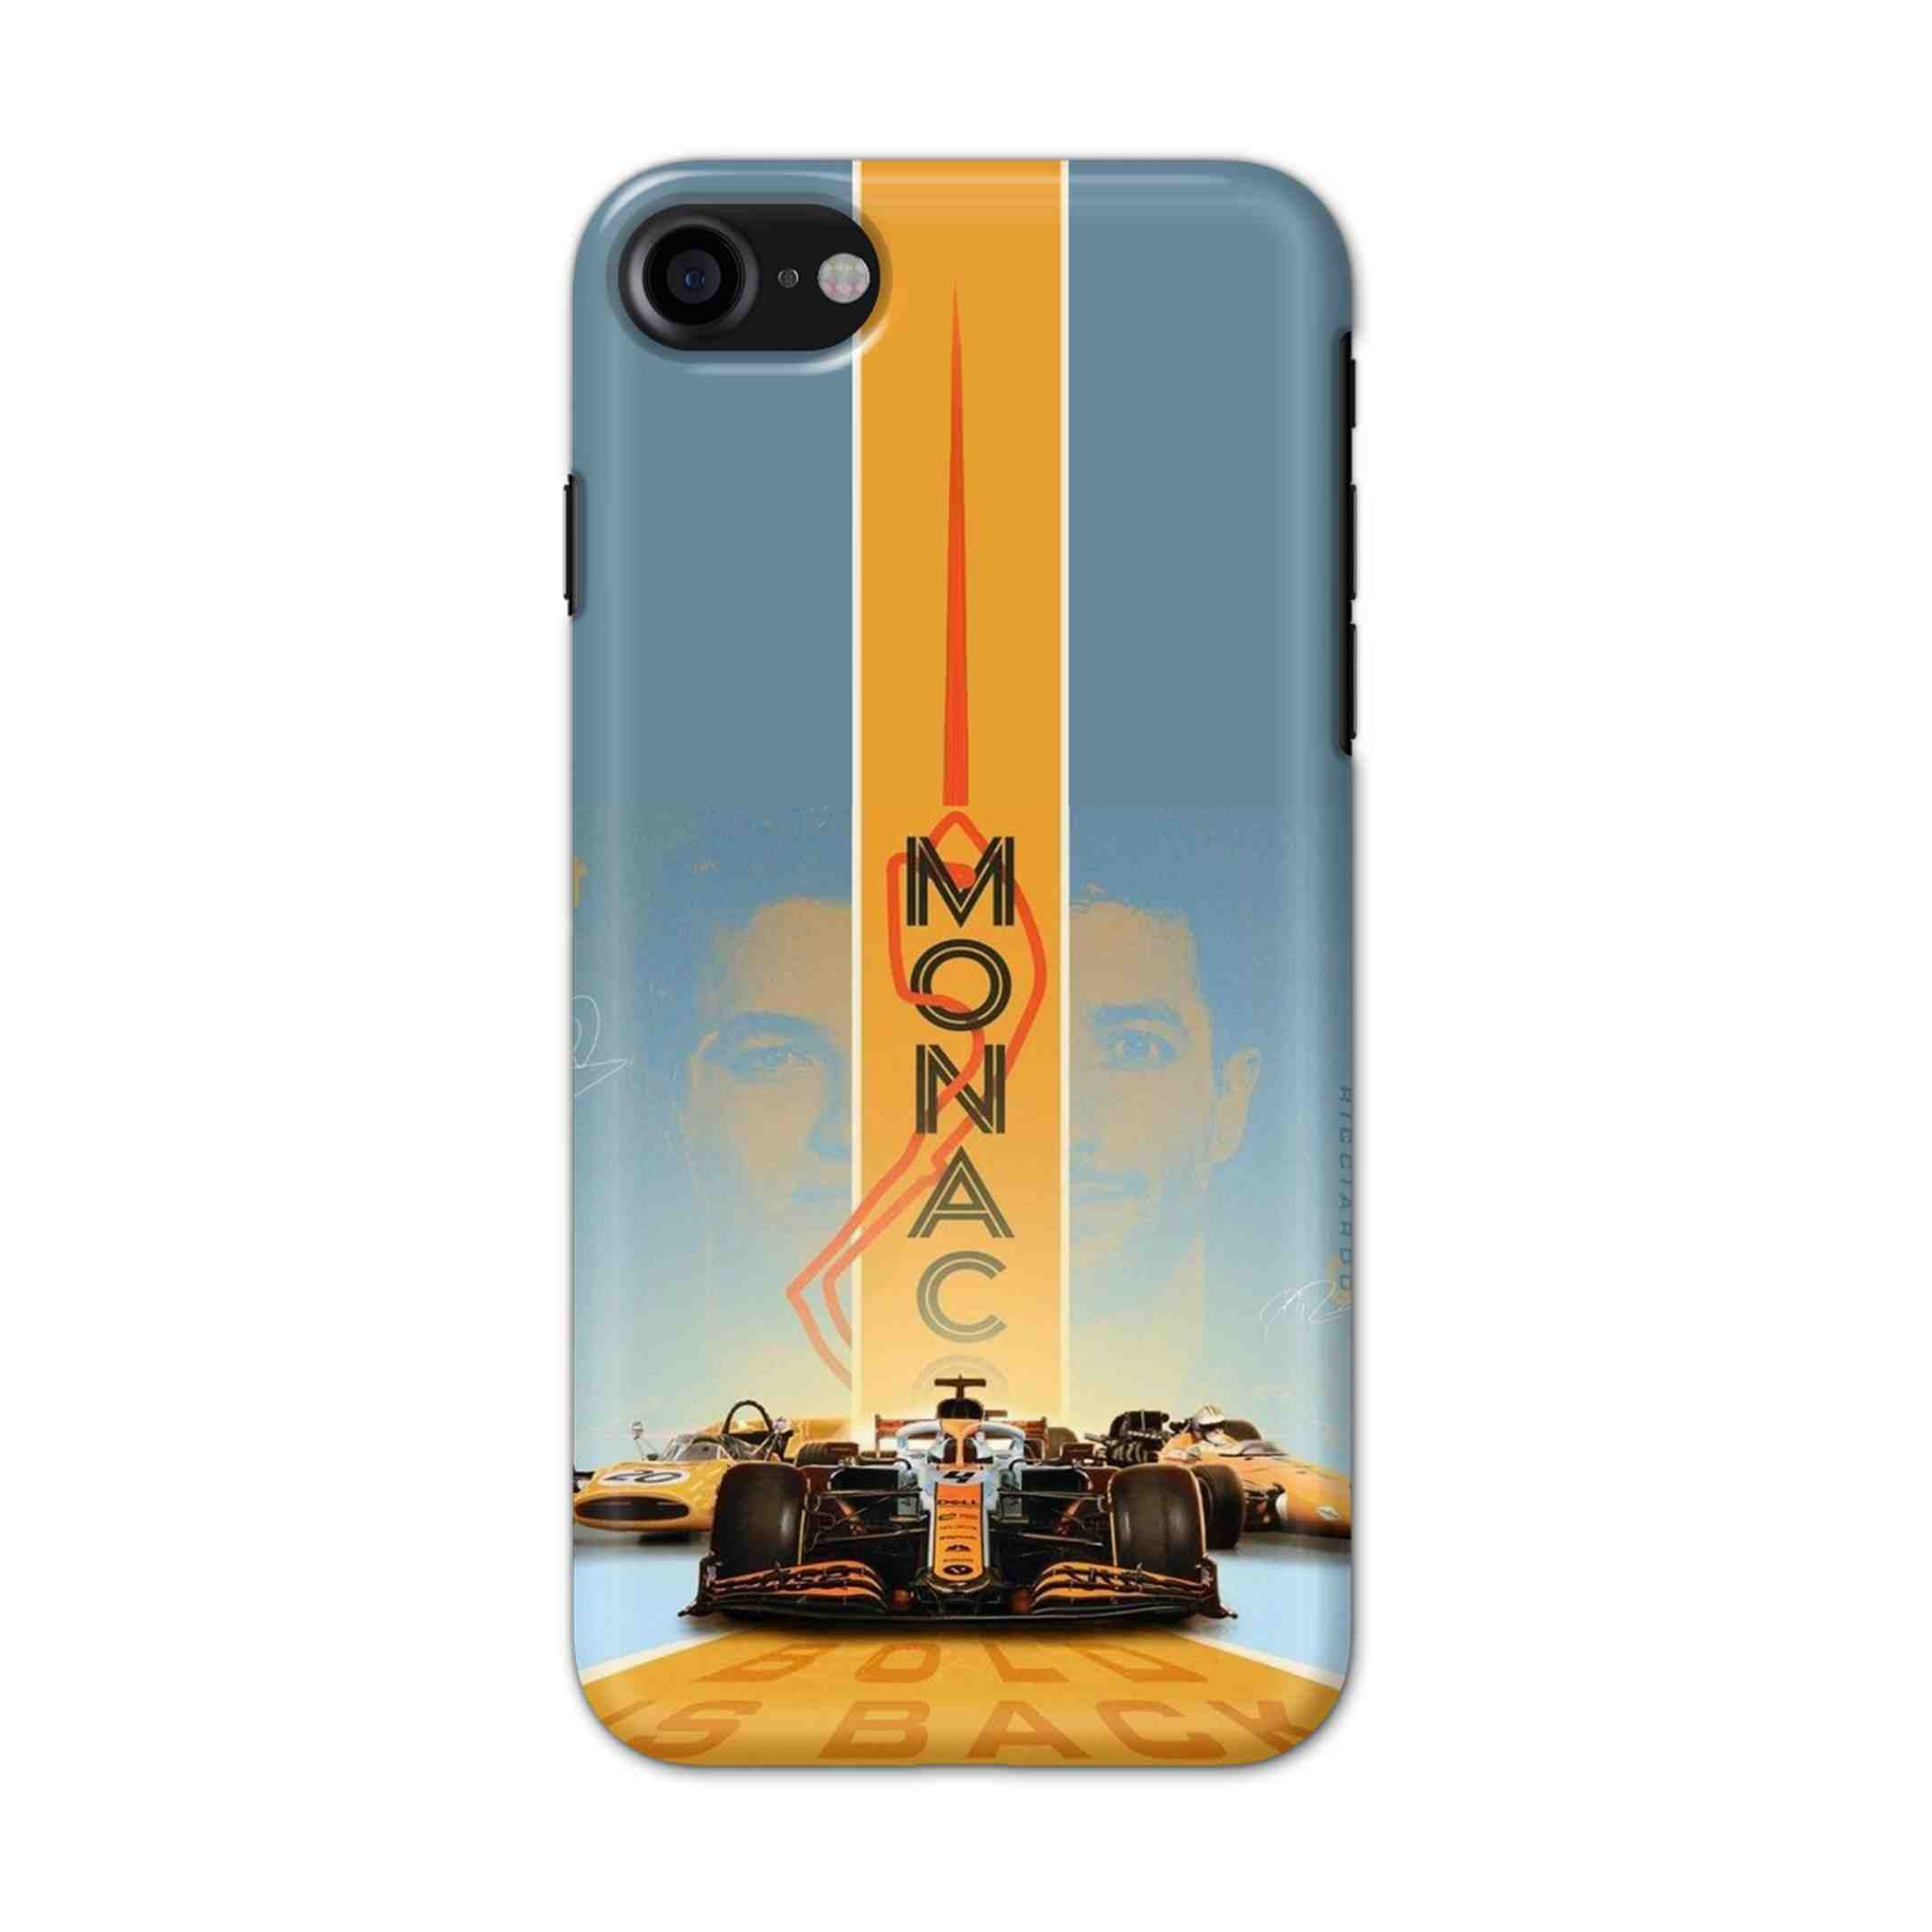 Buy Monac Formula Hard Back Mobile Phone Case/Cover For iPhone 7 / 8 Online